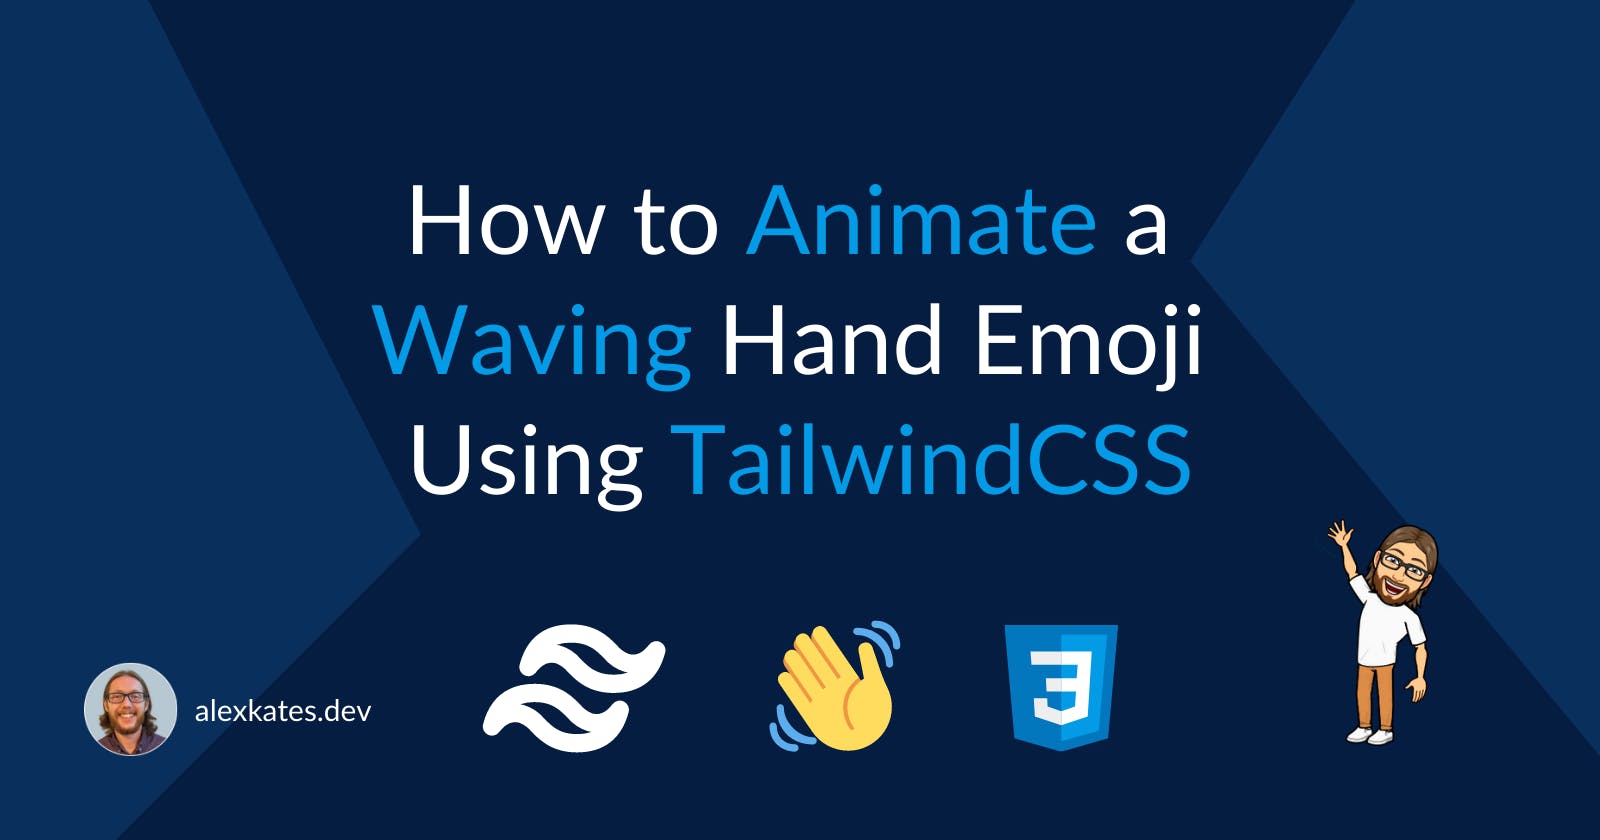 How to Animate a Waving Hand Emoji Using TailwindCSS